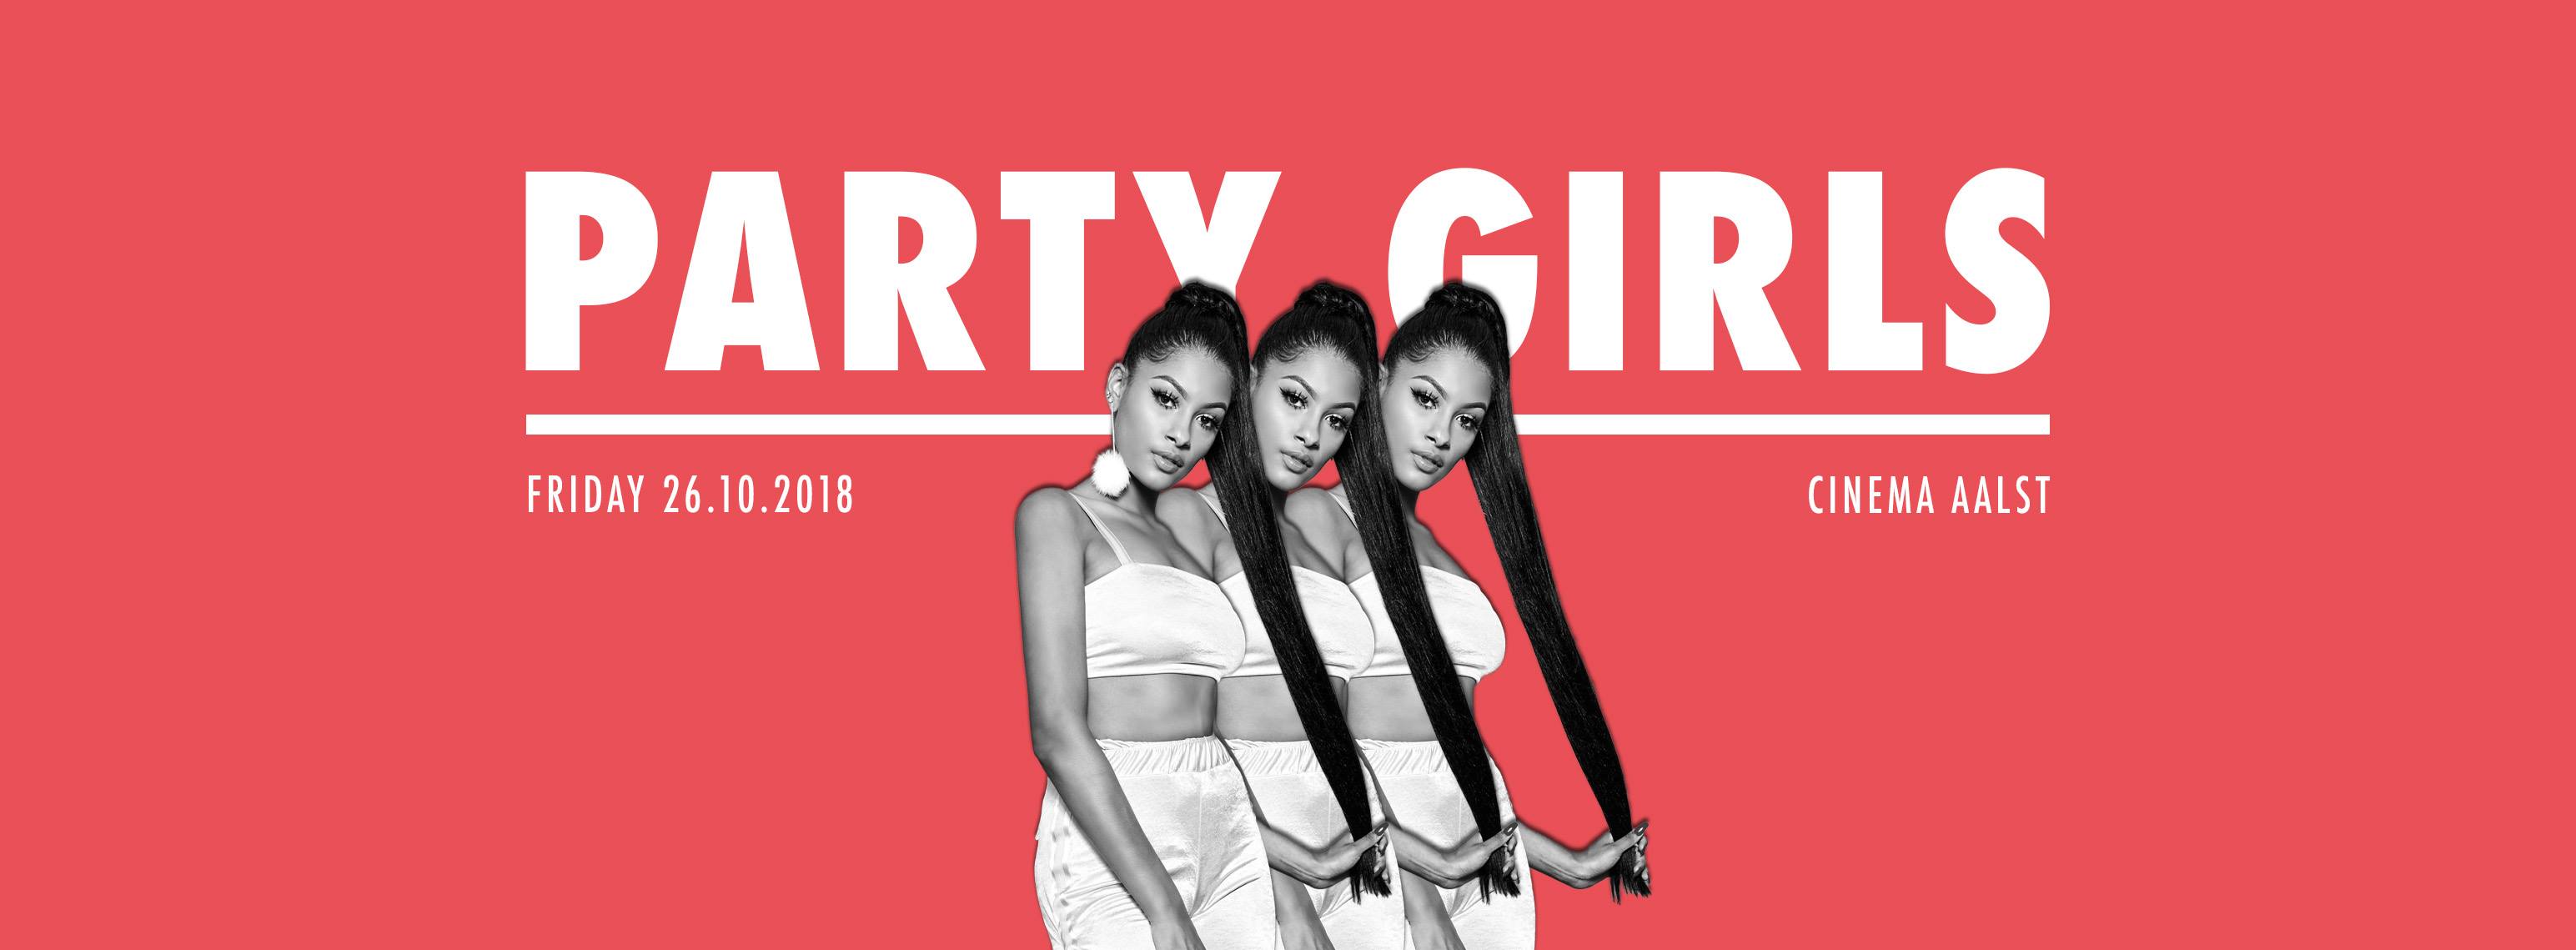 18 10 25 Party Girls CINEMA Vrijdag 26 oktober 2018